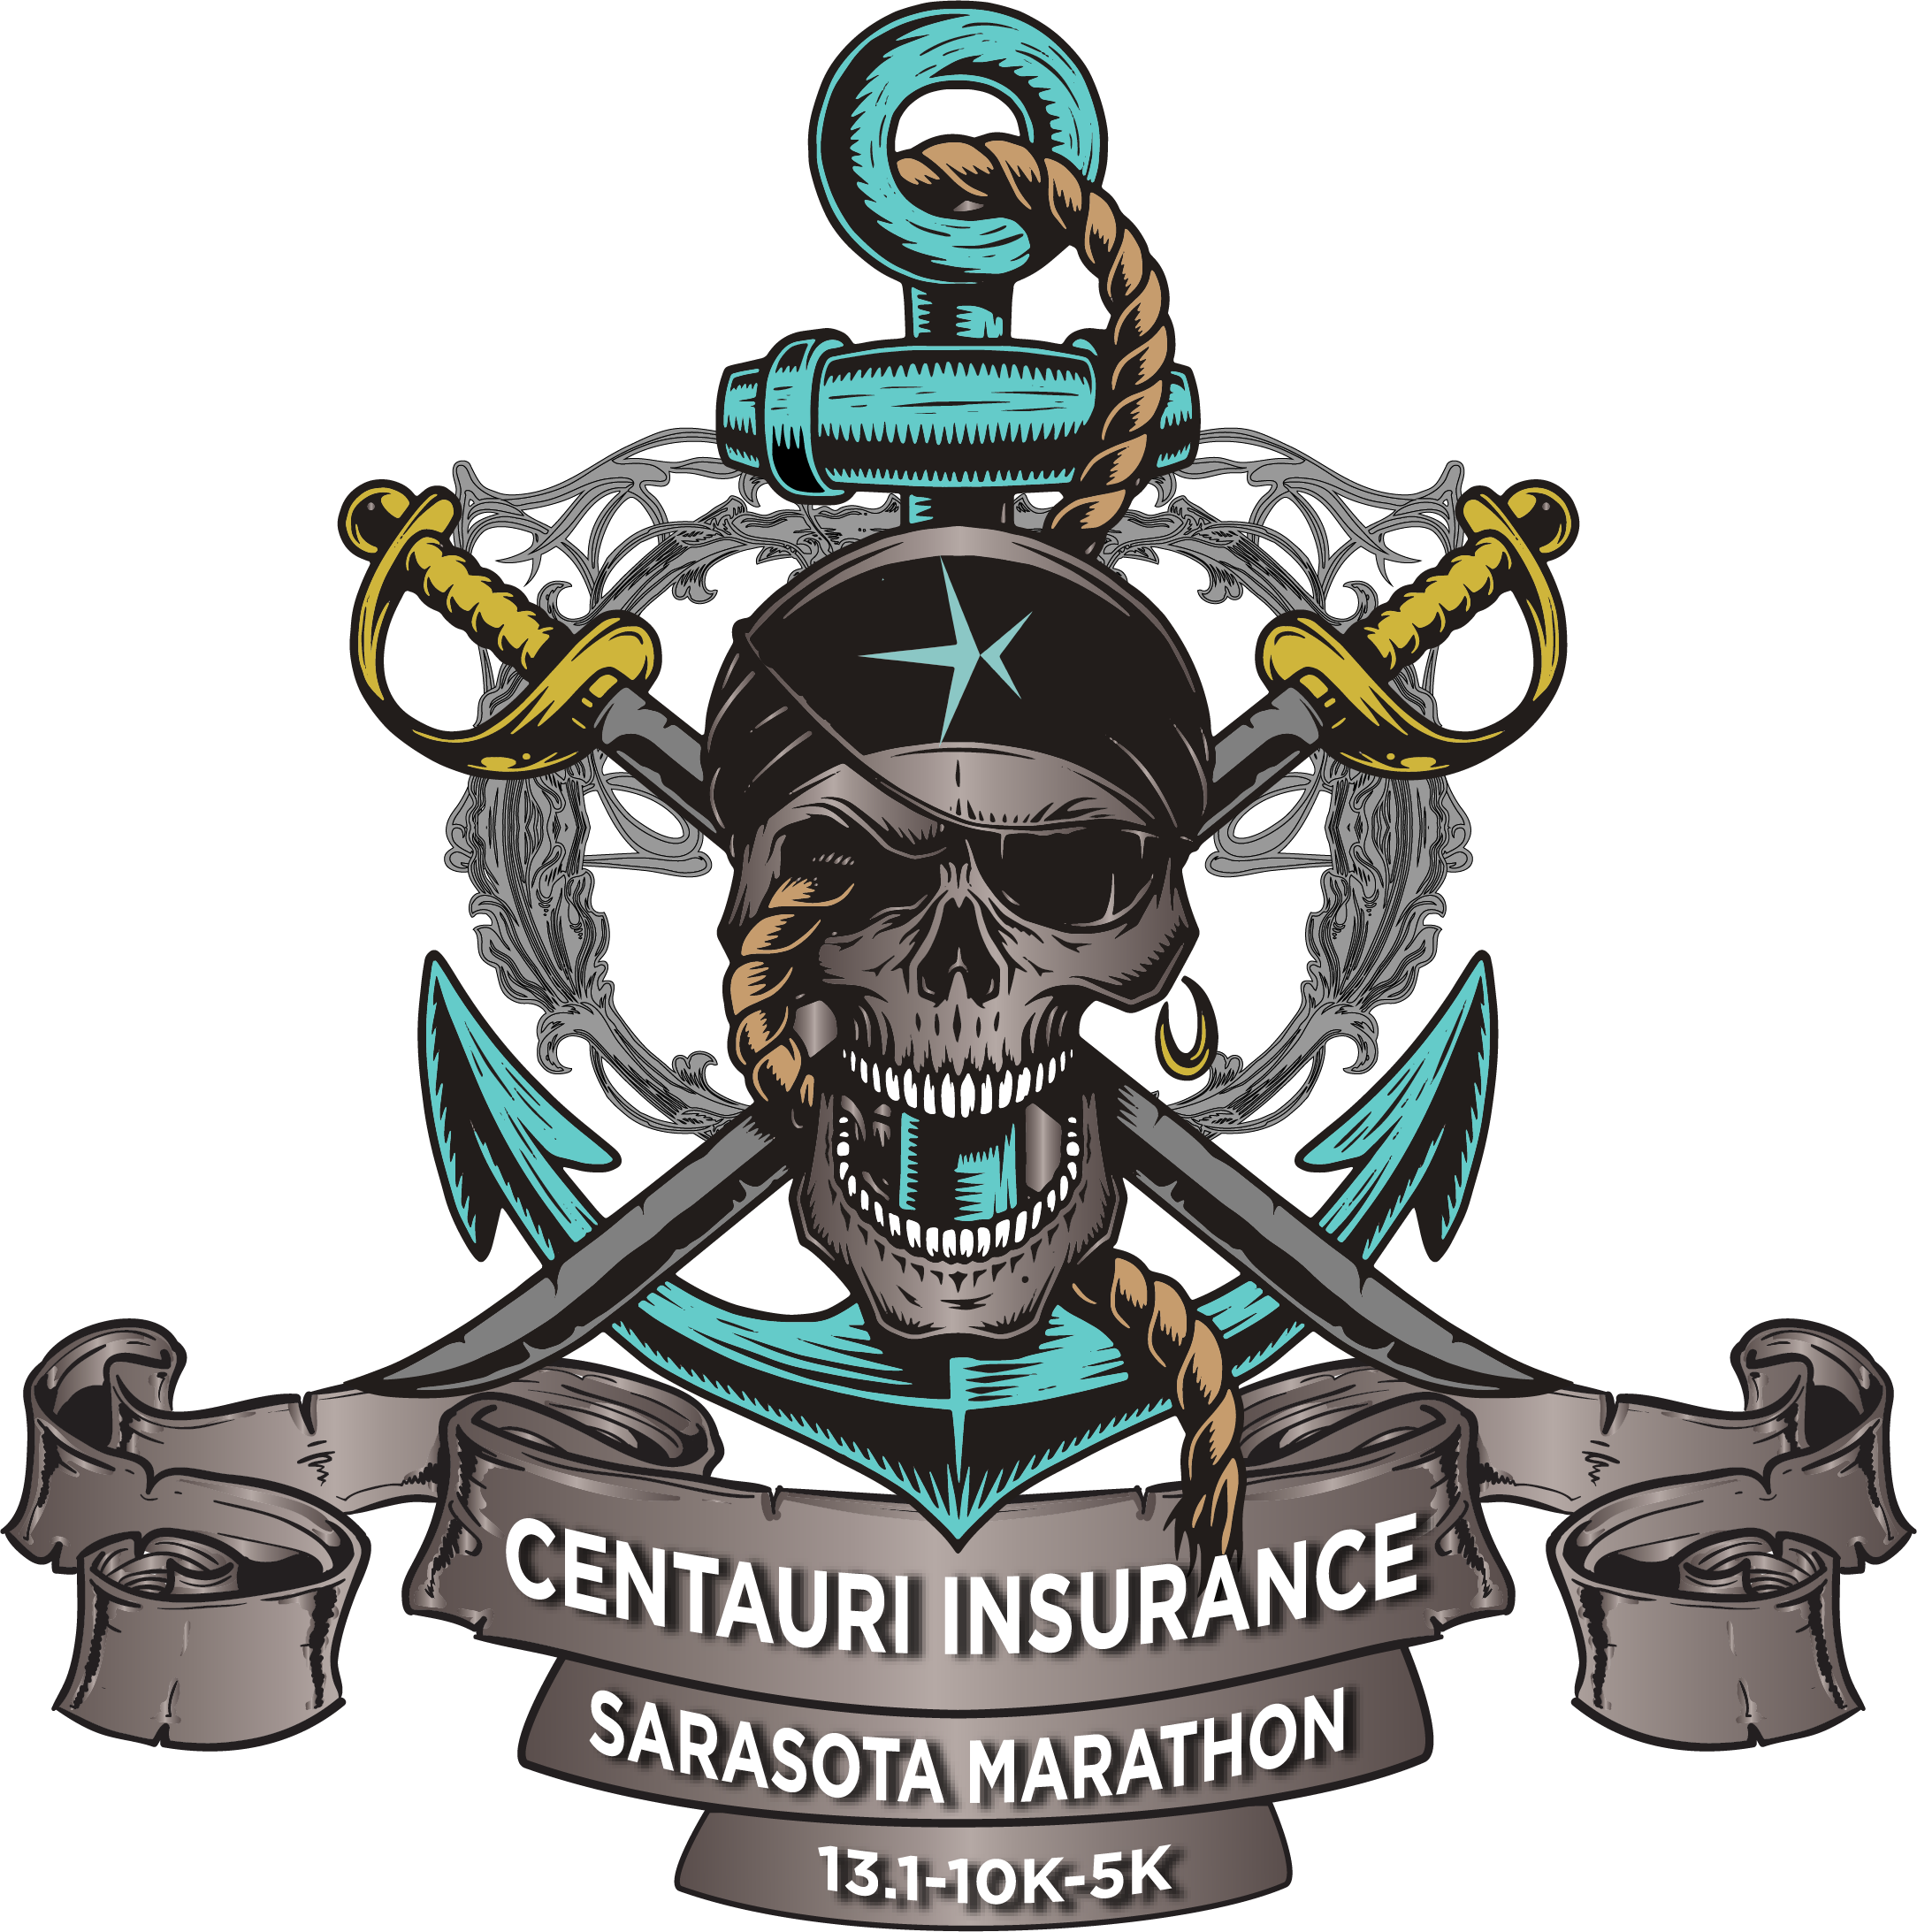 Centauri insurance Sarasota Marathon